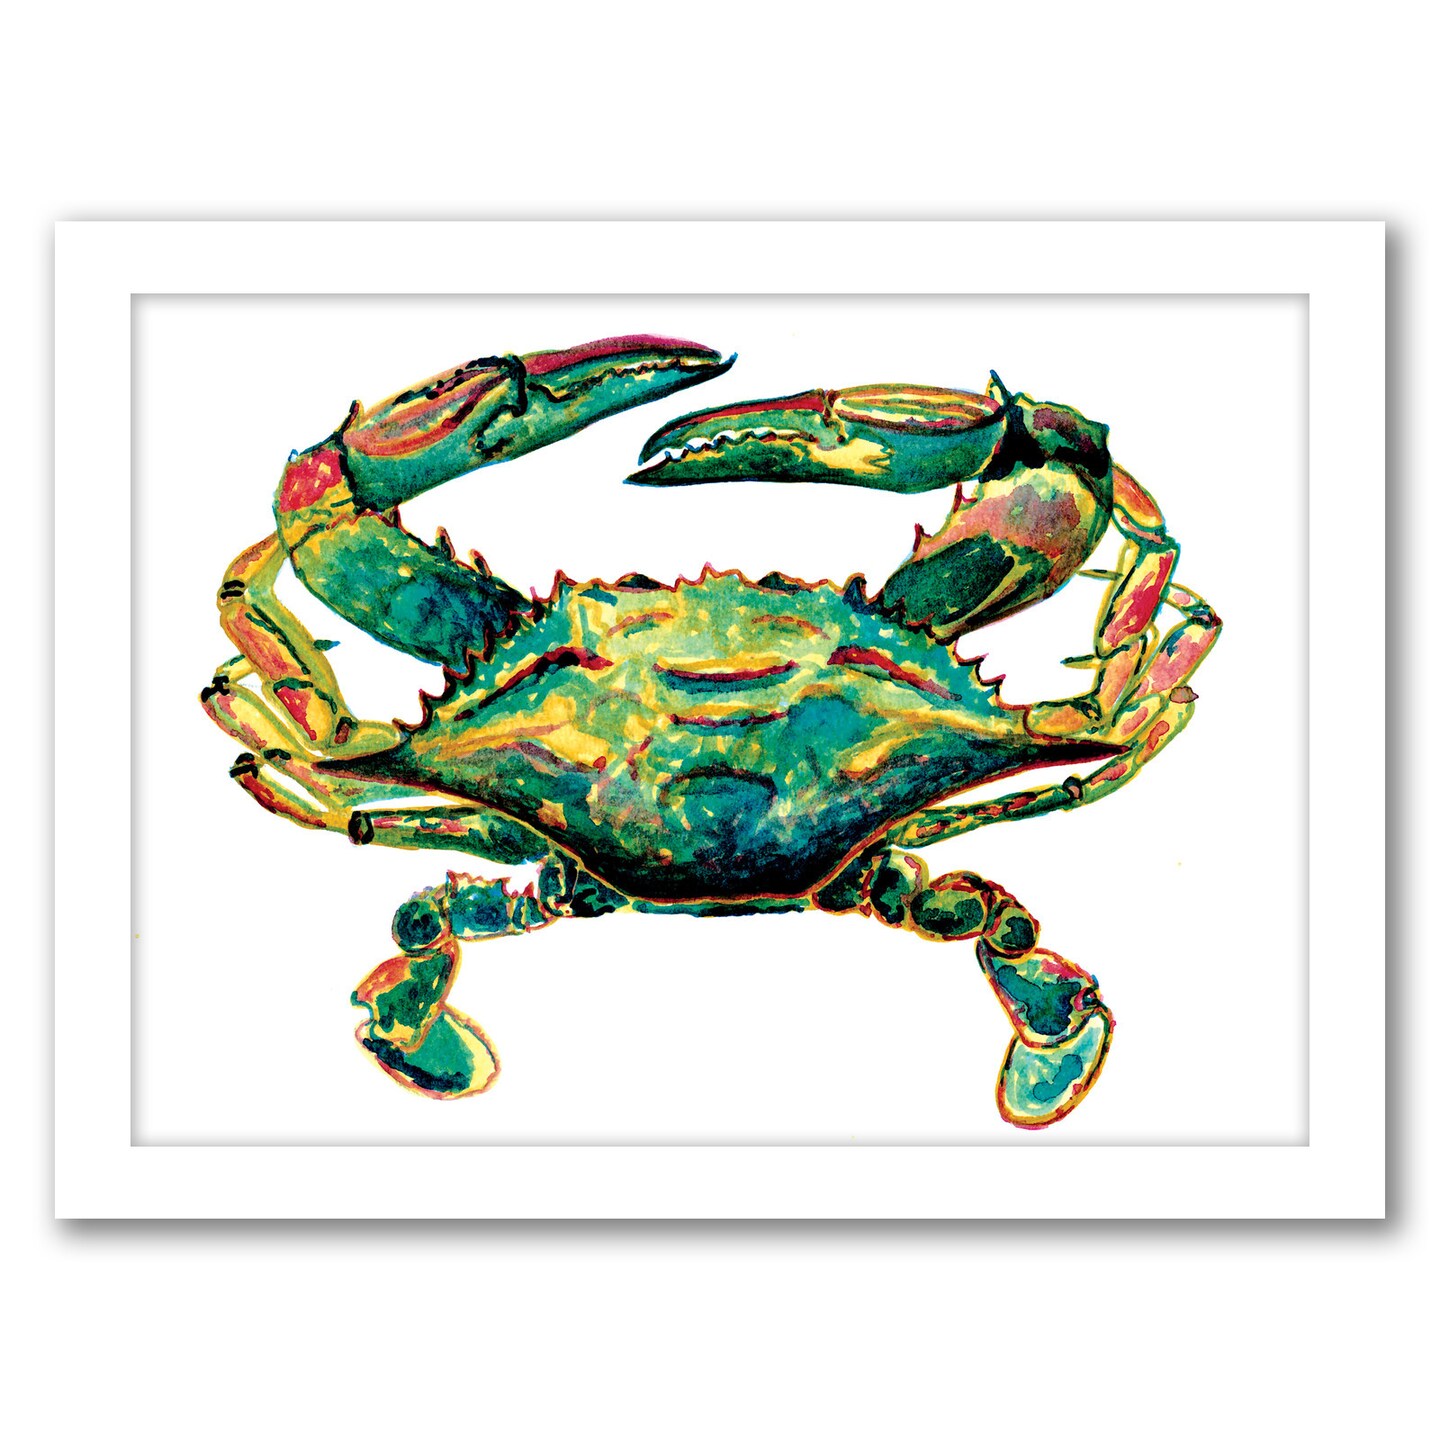 Blue Crab2 by T.J. Heiser Frame  - Americanflat